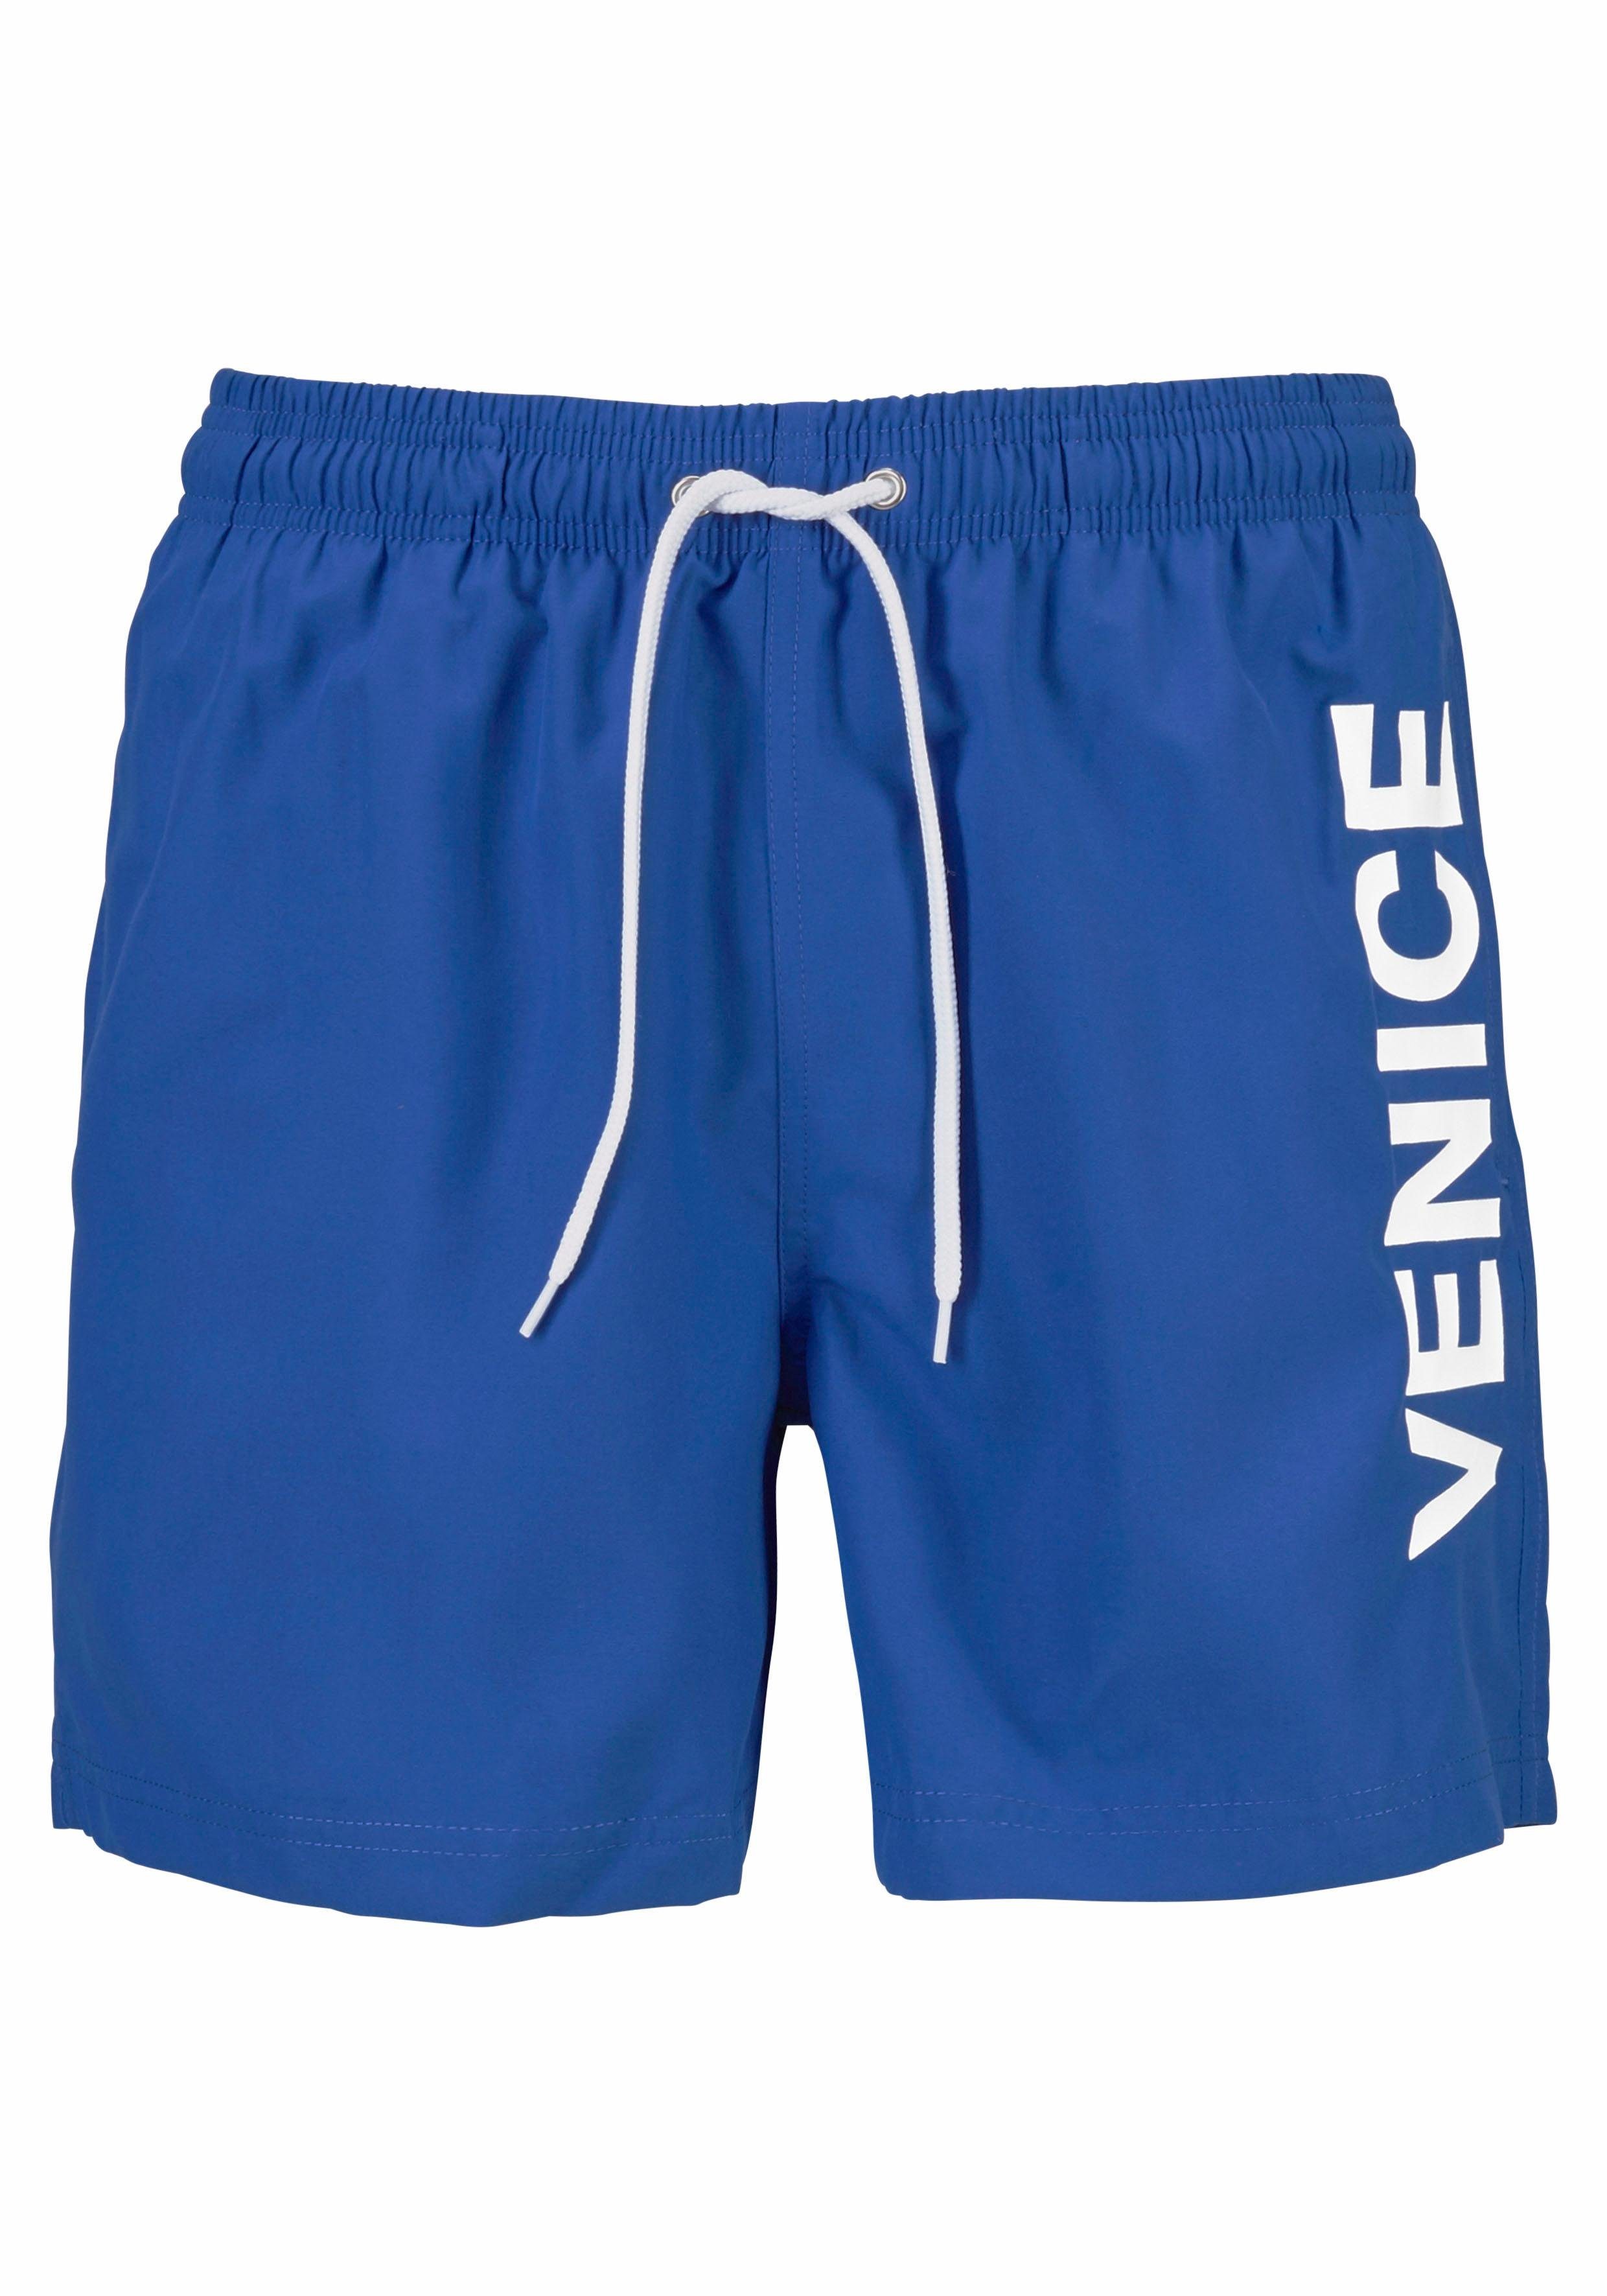 mit Beach Logodruck blau Badeshorts Venice